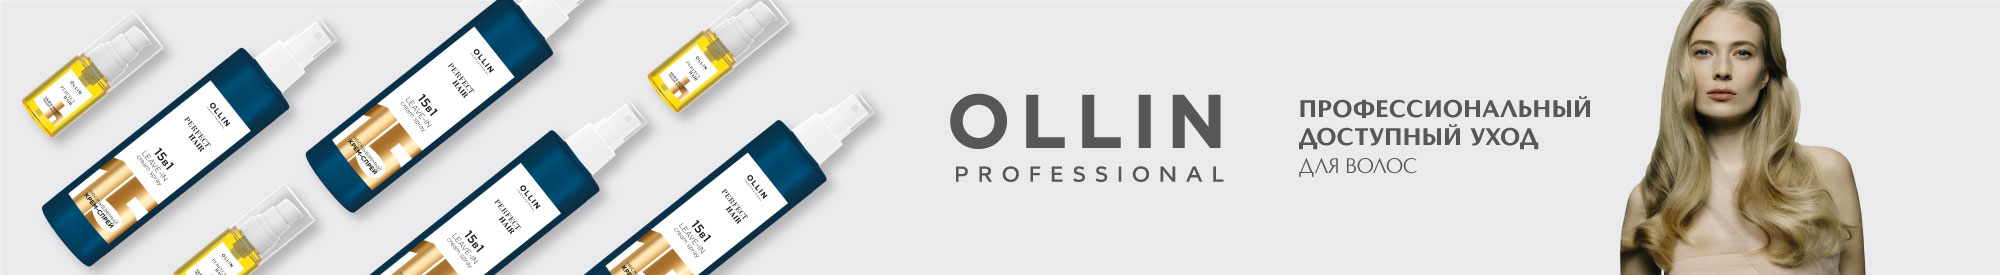 OLLIN PROFESSIONAL